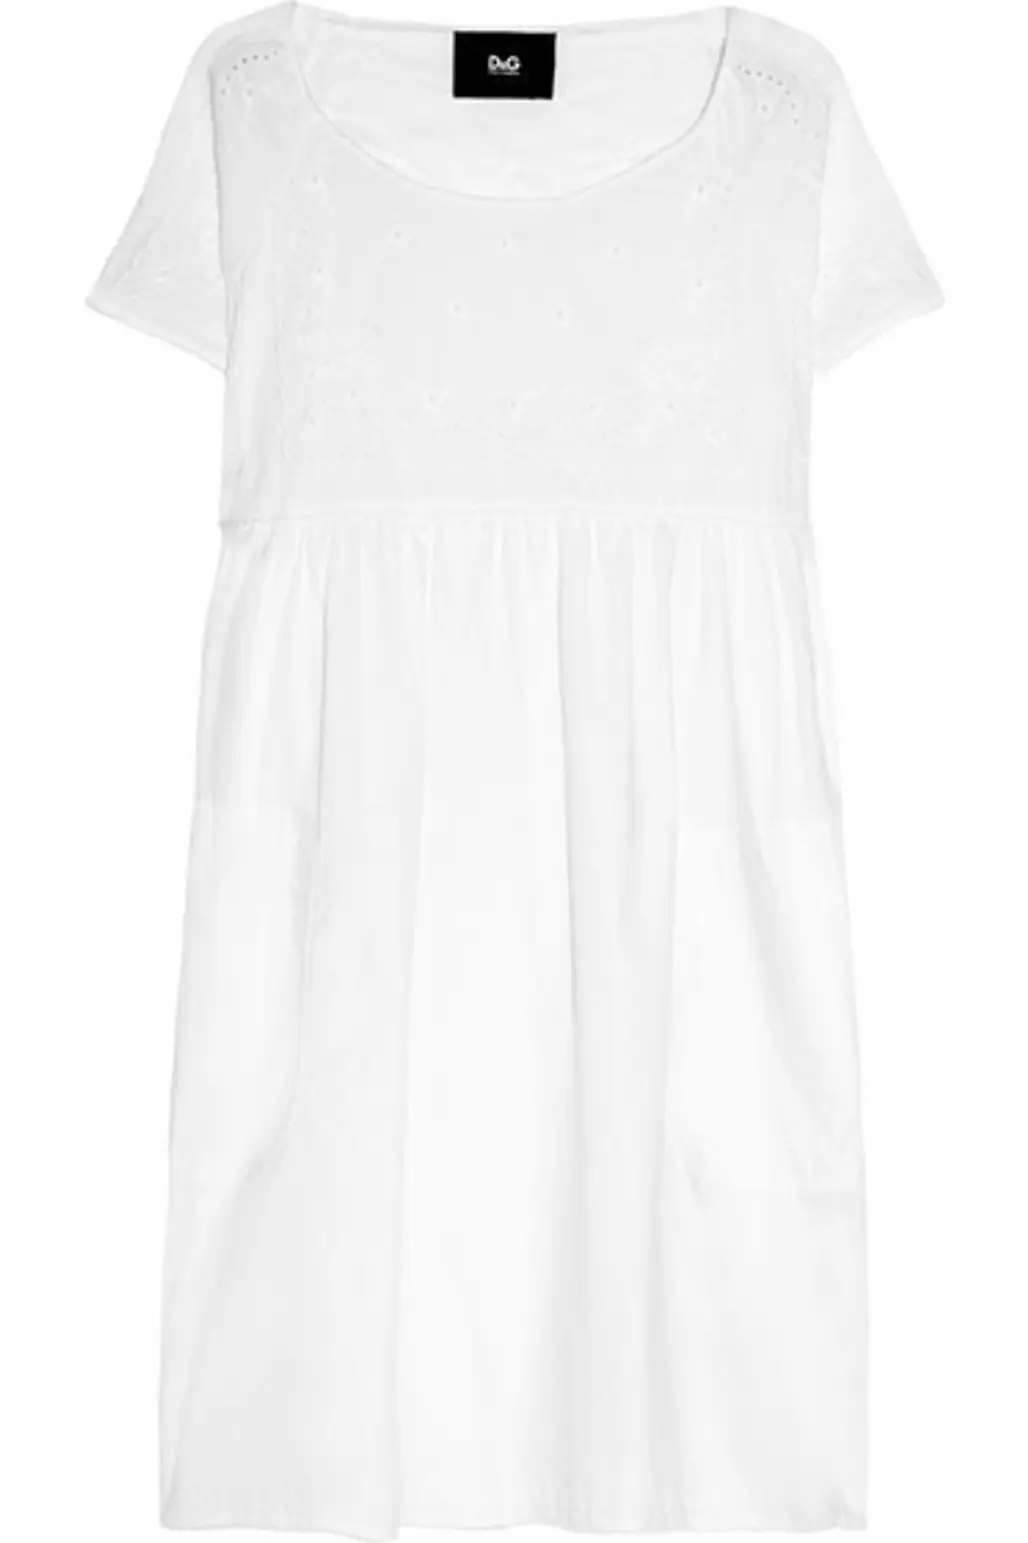 D&G Embroidered Cotton Dress